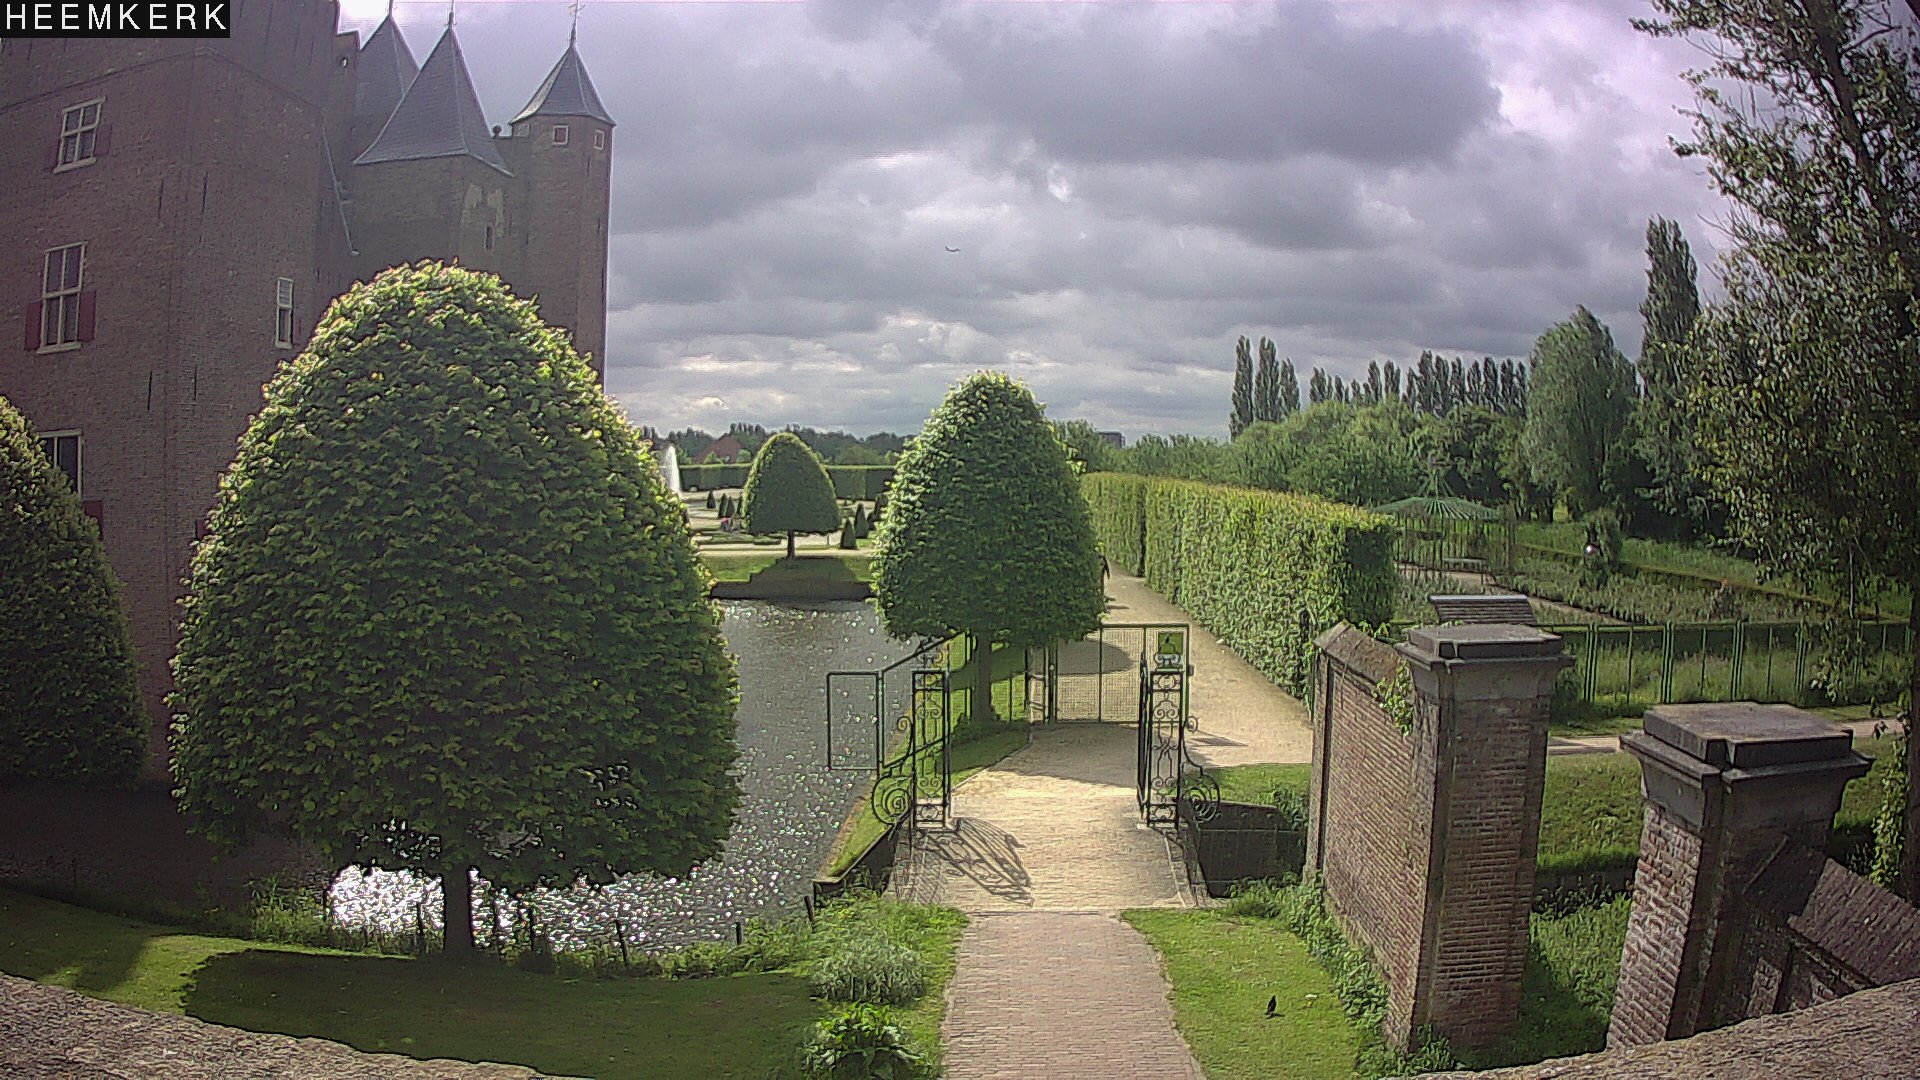 Heemskerk Tor. 10:46